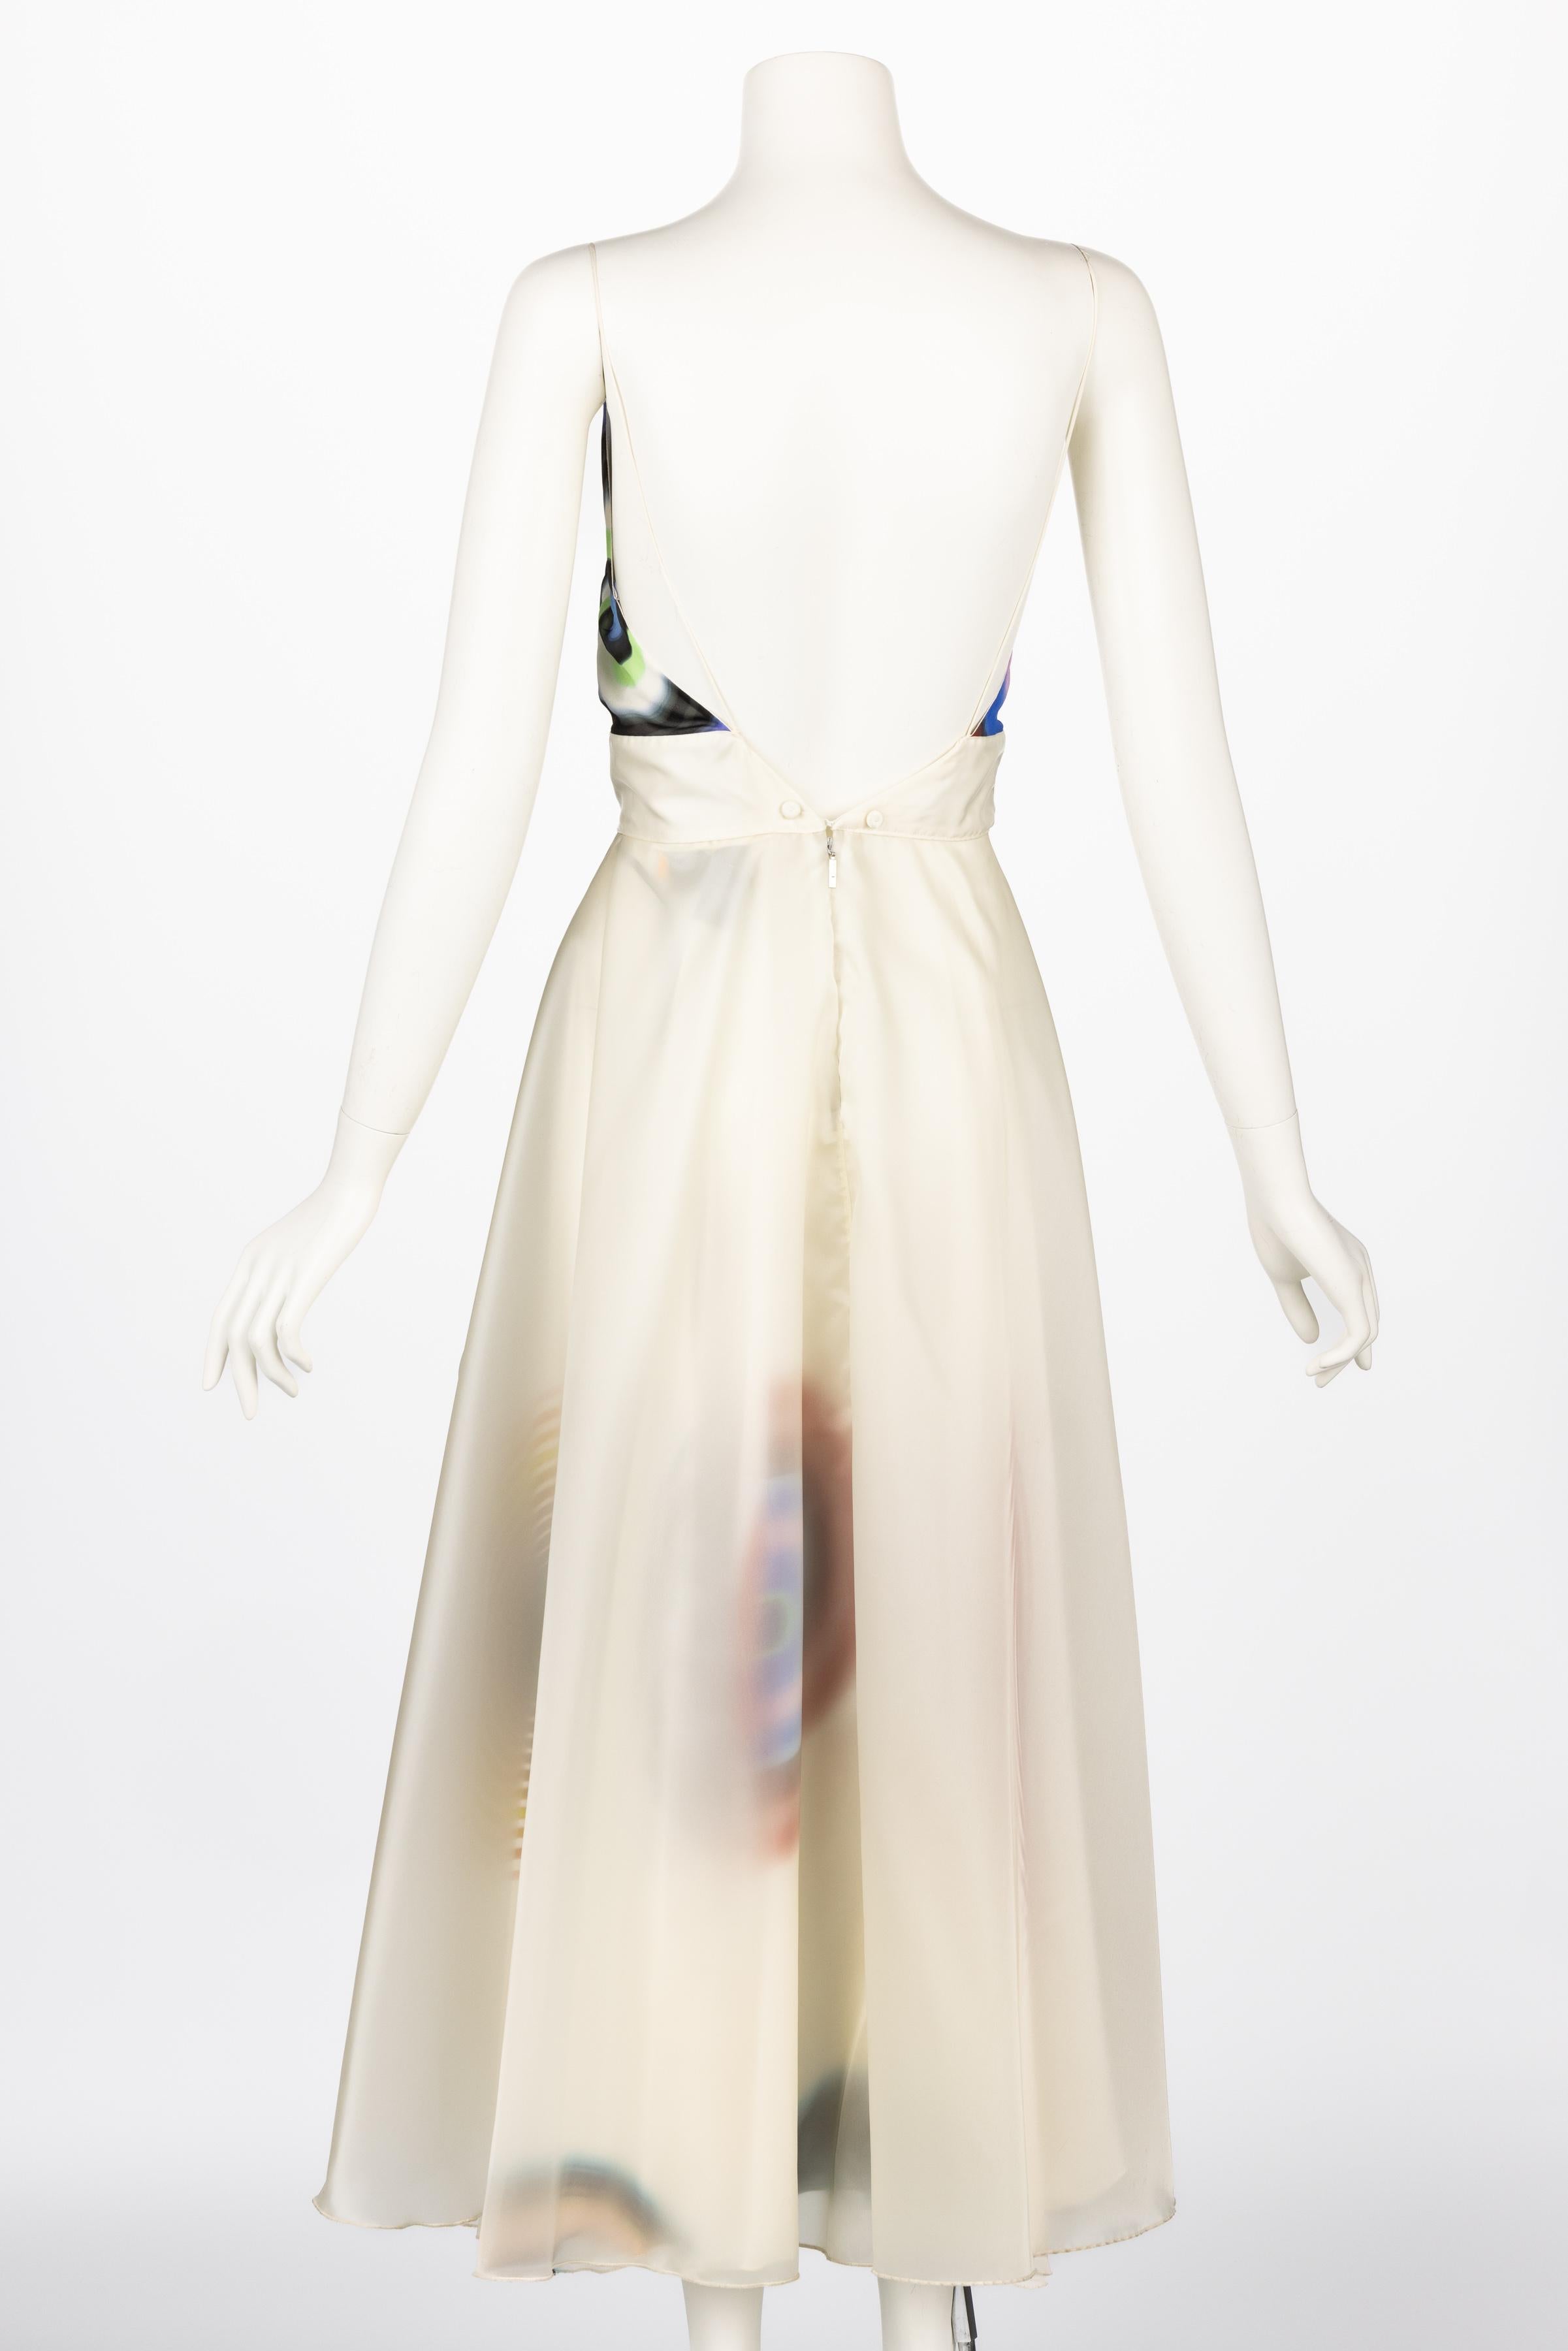 Fendi Karl Lagerfeld Silk Print Dress S/S 2008 Runway For Sale 2